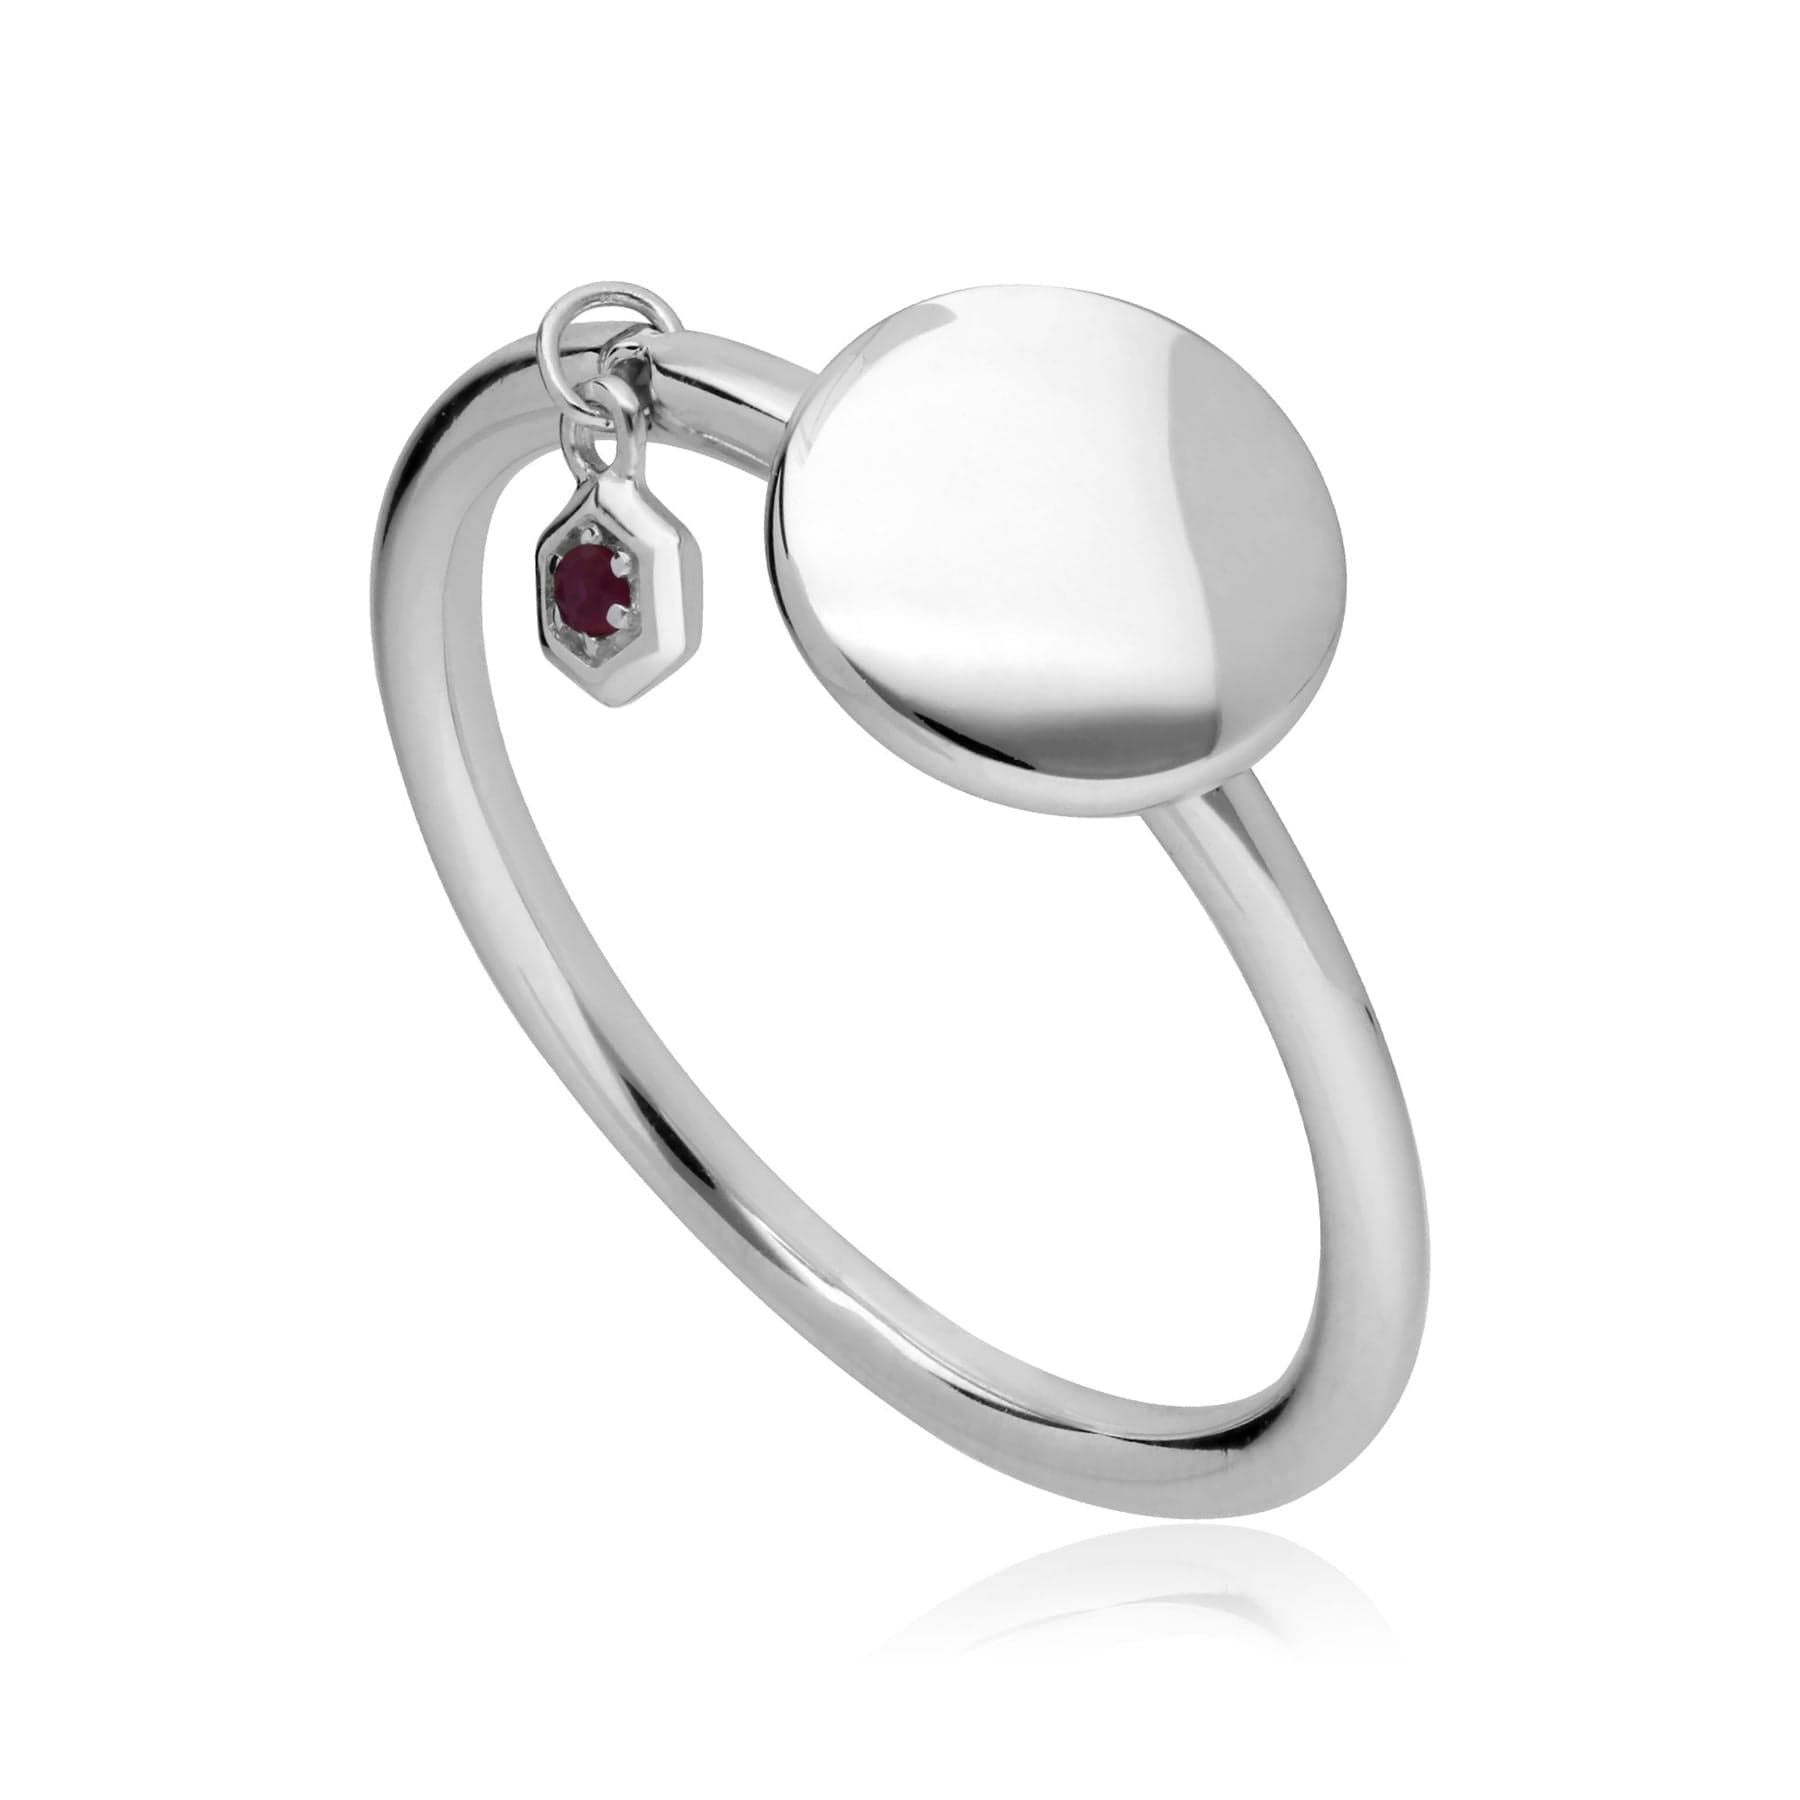 Ruby Engravable Ring in Sterling Silver - Gemondo